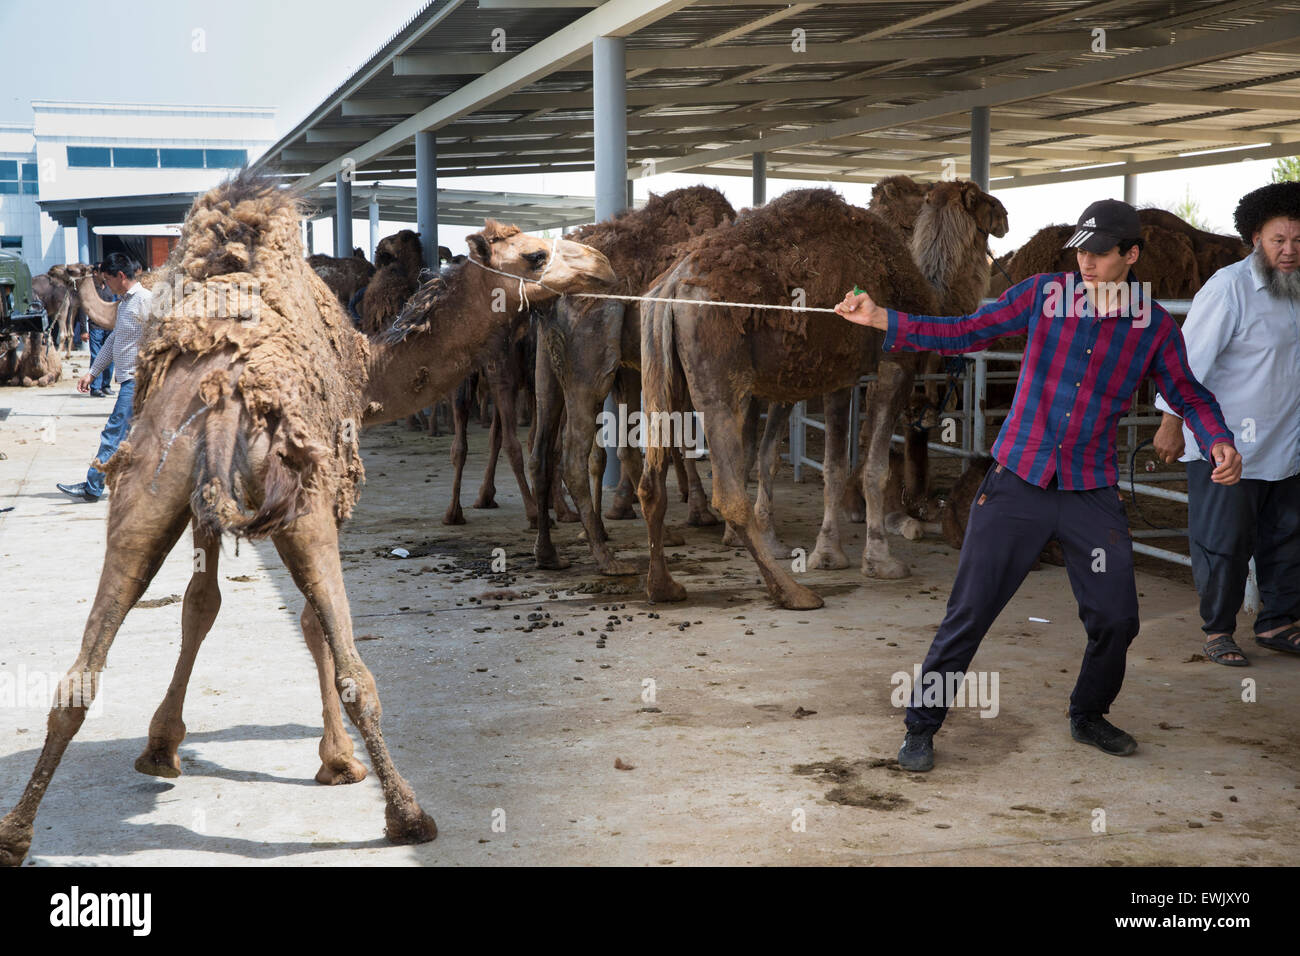 Obstreperous camel at the Sunday livestock market at Altyn Asyr outside Ashgabat, Turkmenistan Stock Photo